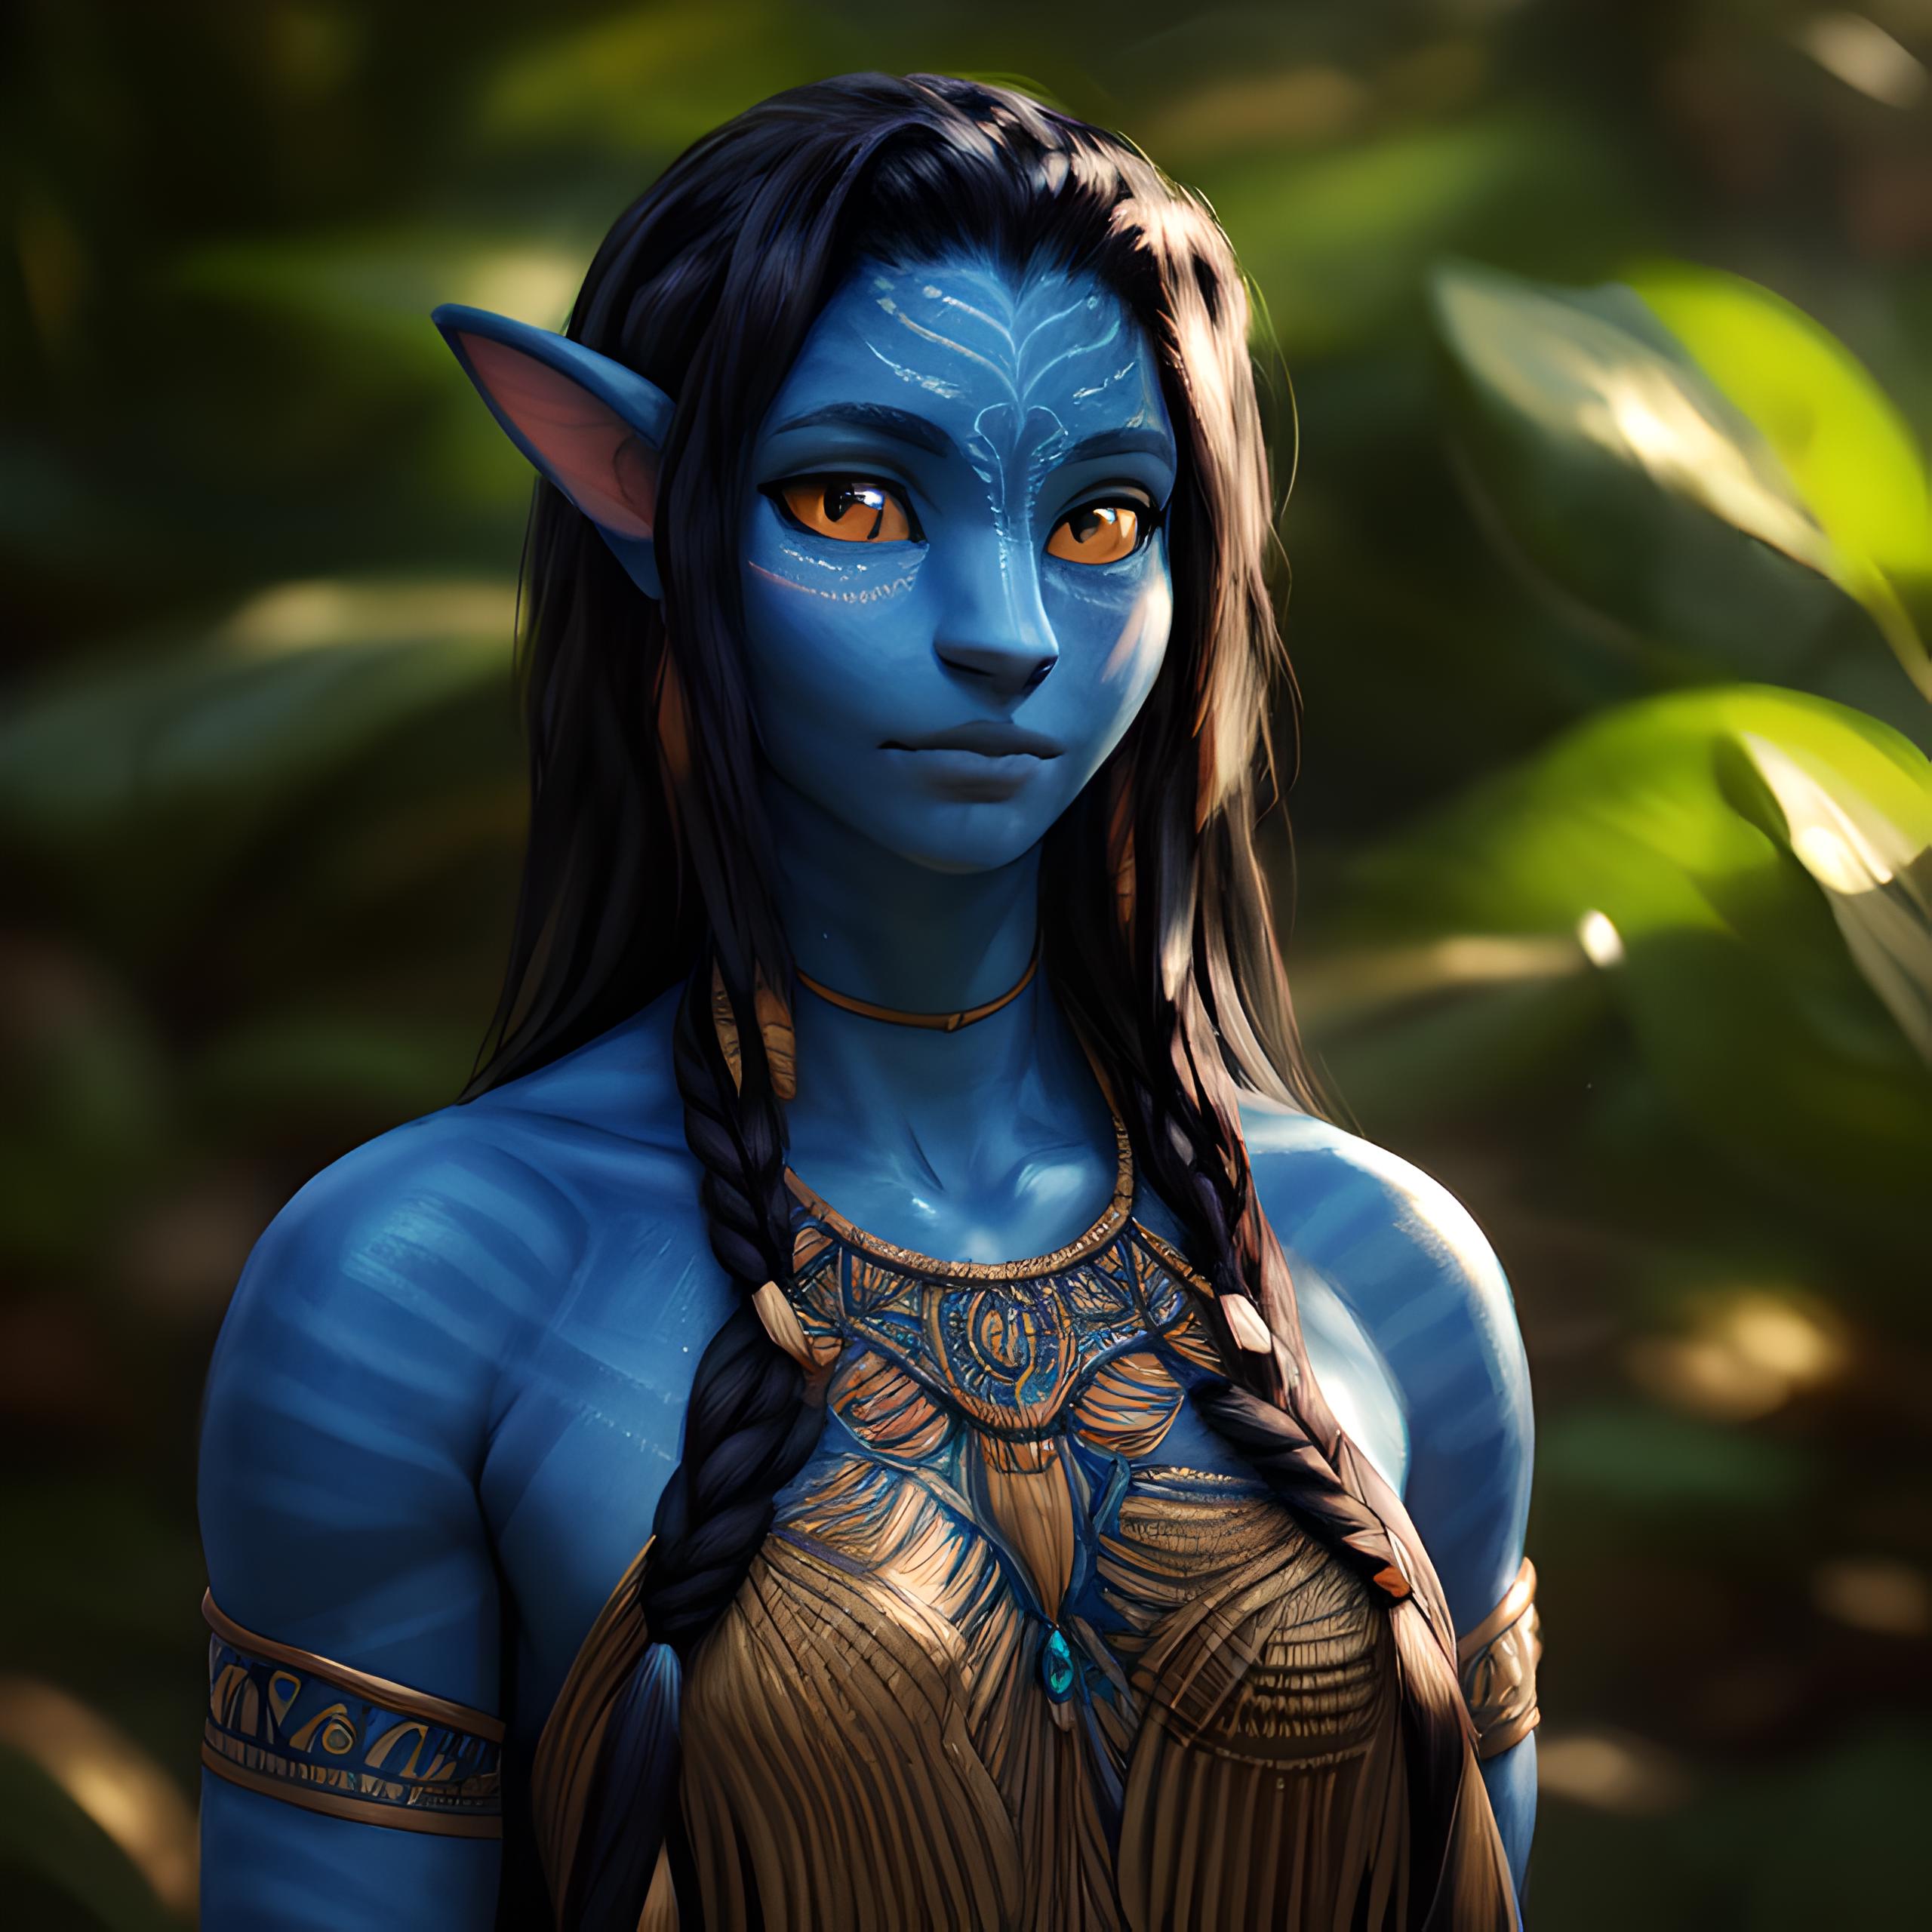 Na'vi (James Cameron's Avatar) image by notagaylizard